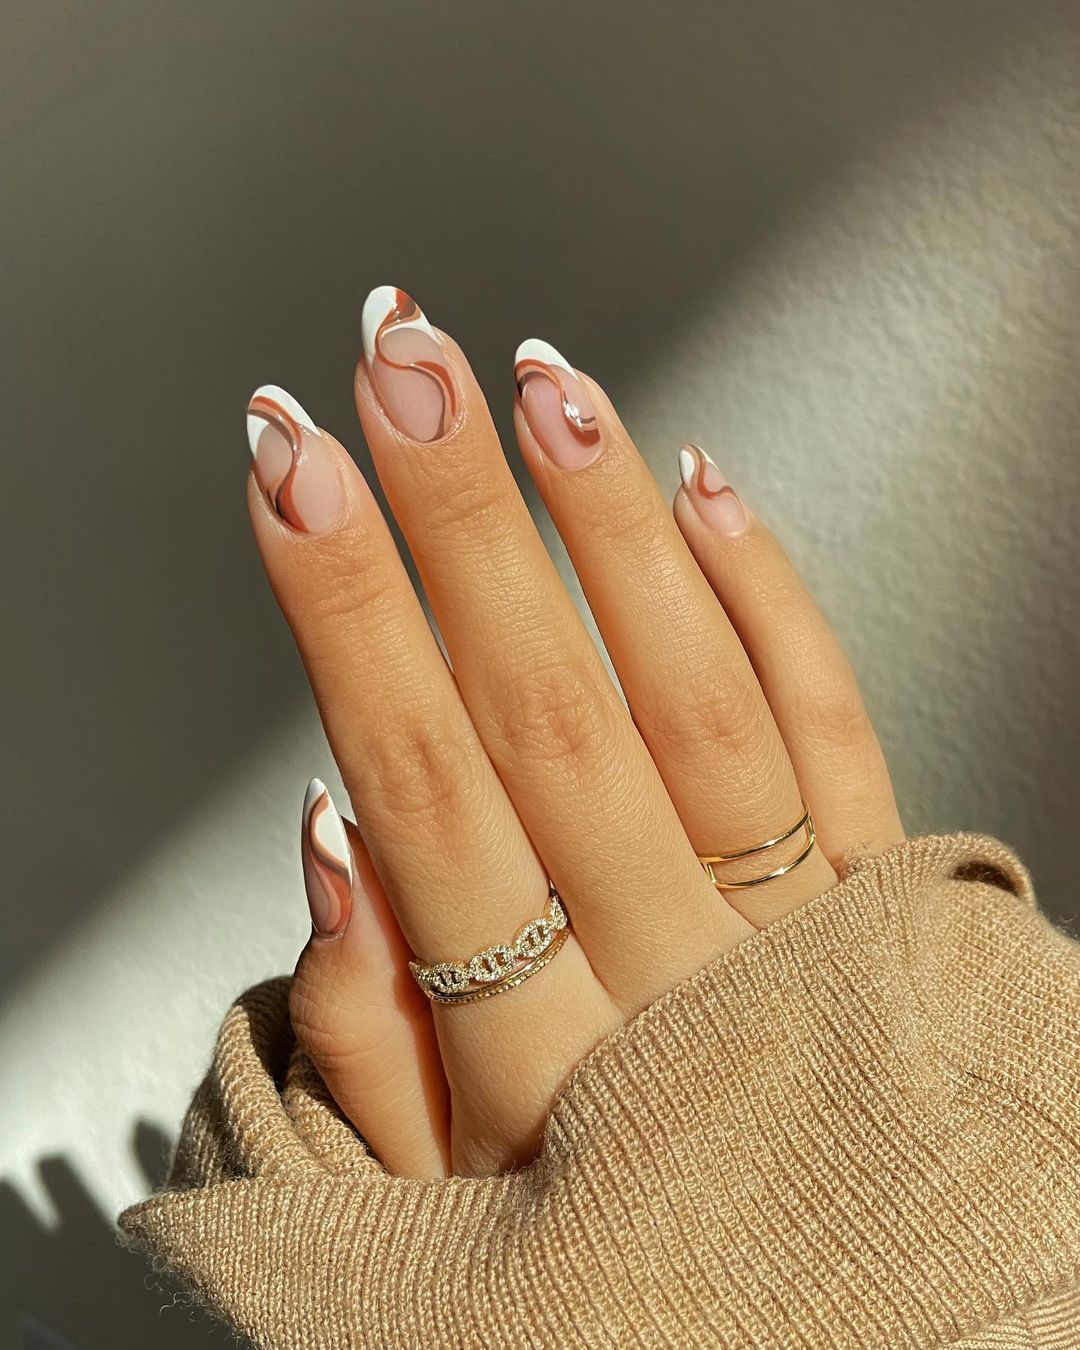 Share more than 171 cool nail polish ideas latest